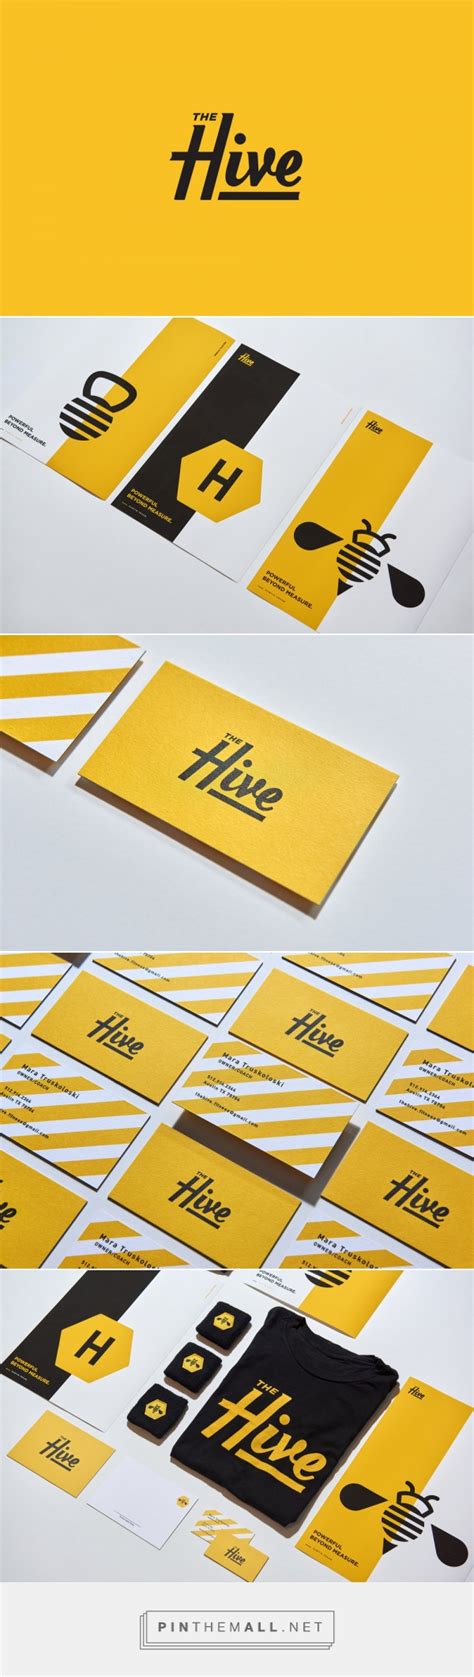 The Hive — Steve Wolf Designs Created Via